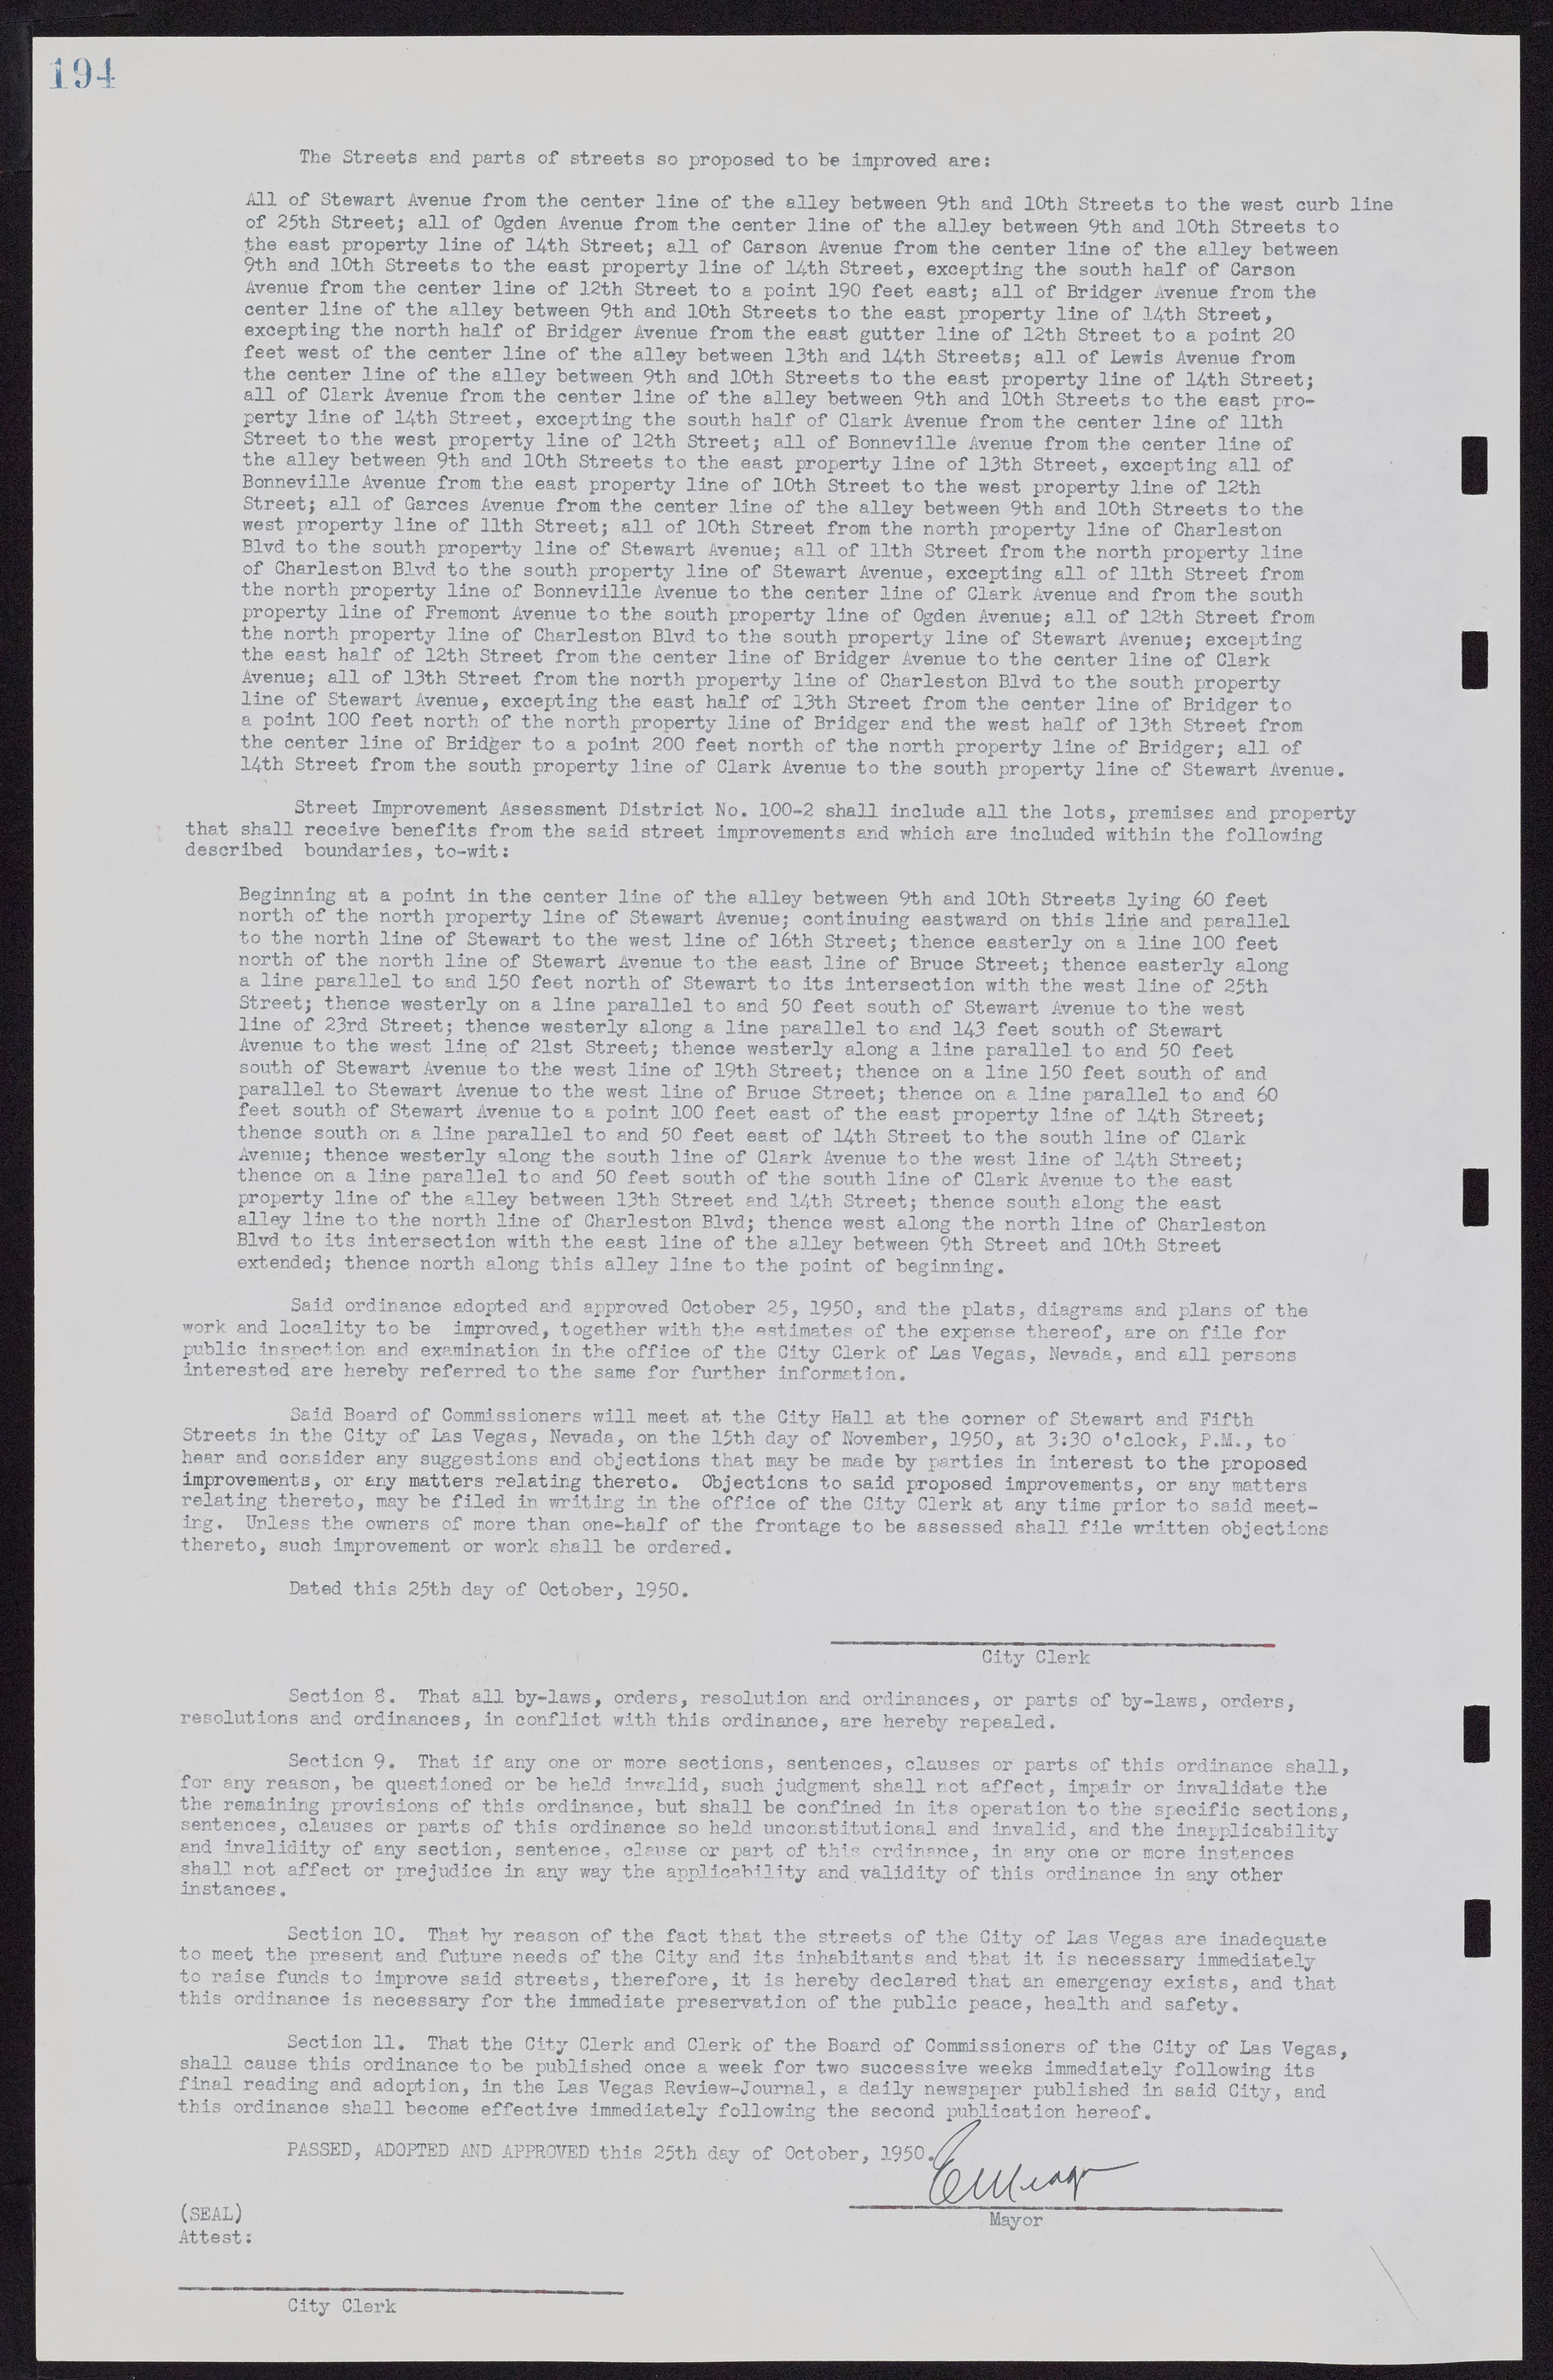 Las Vegas City Commission Minutes, November 7, 1949 to May 21, 1952, lvc000007-204